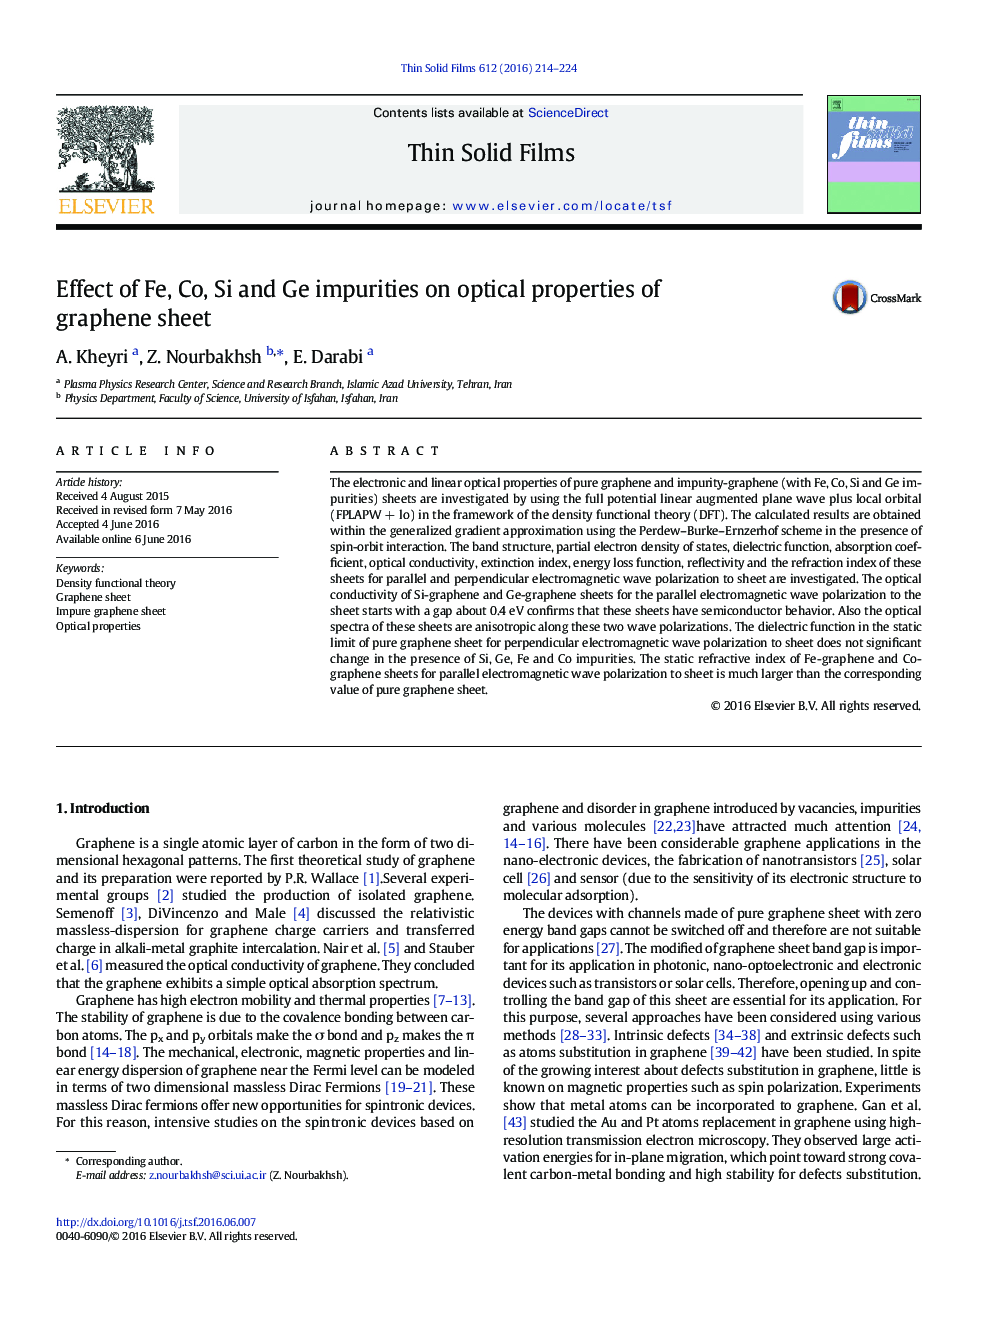 Effect of Fe, Co, Si and Ge impurities on optical properties of graphene sheet